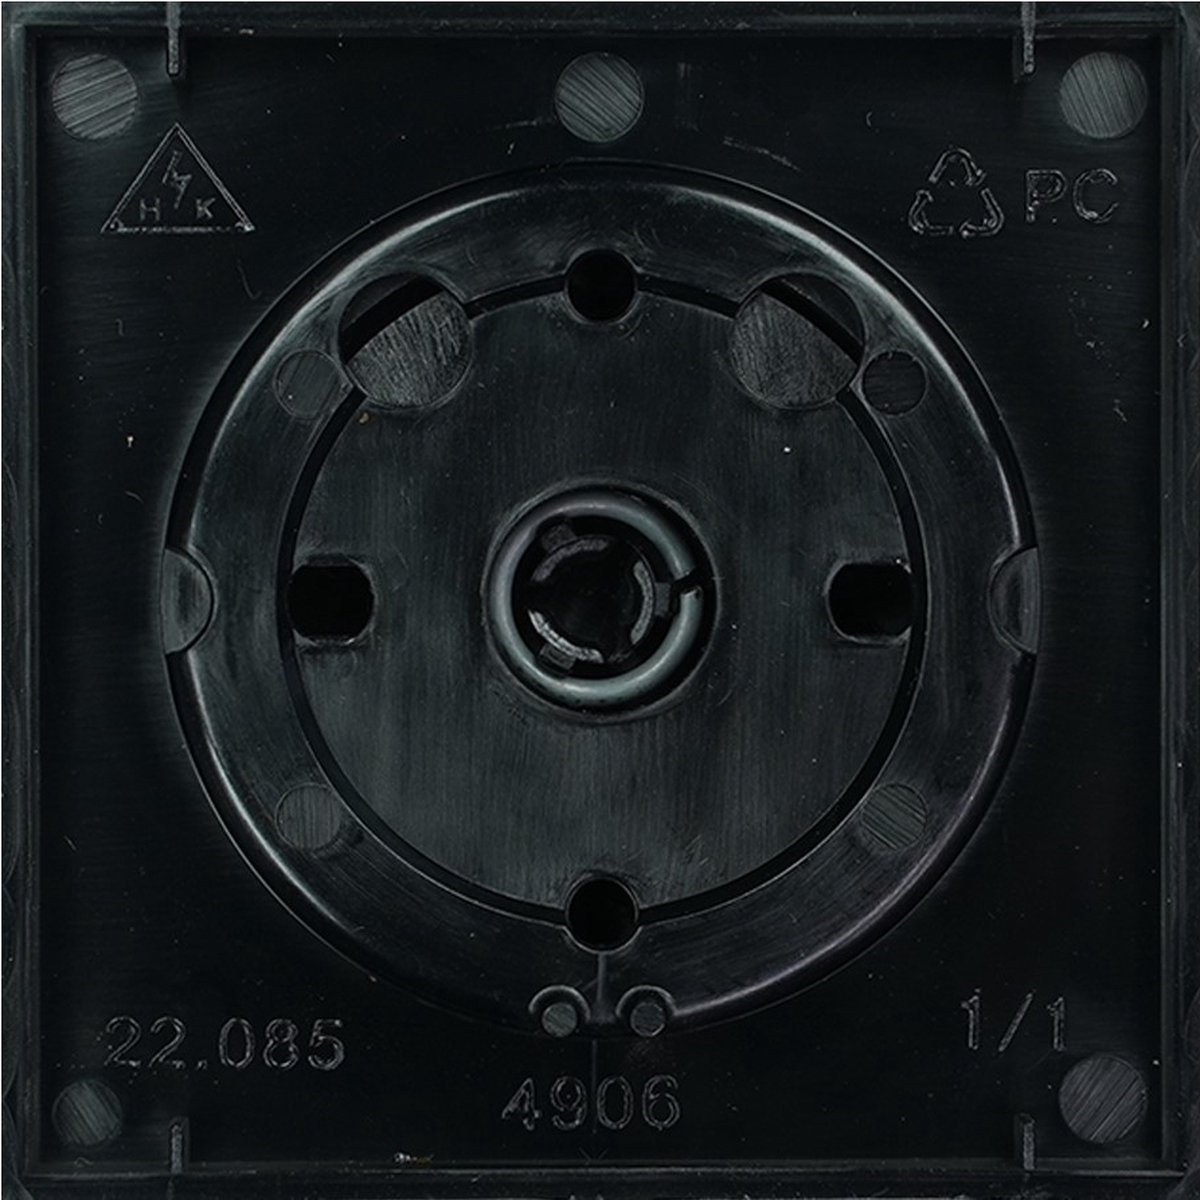 EMhub Quadro55 (by Kopp) centraalplaat met knop tbv draaidimmer - zwart mat (4088087)